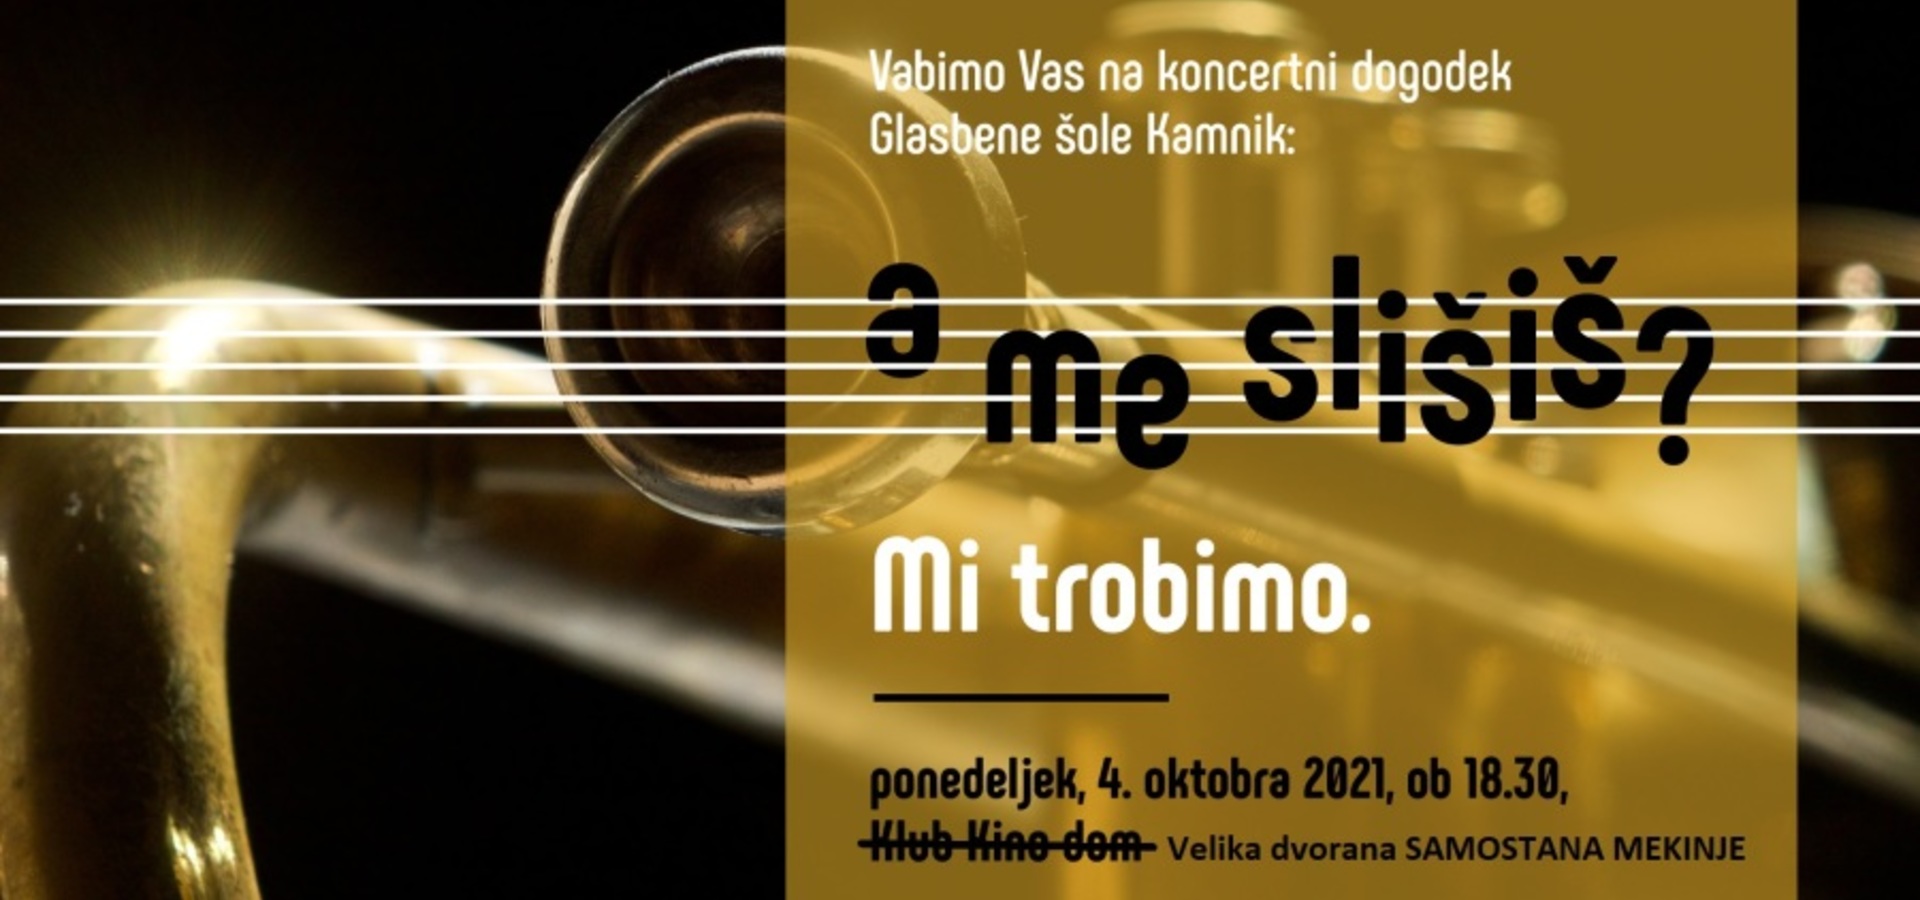 Glasbena šola Kamnik: A me slišiš? 